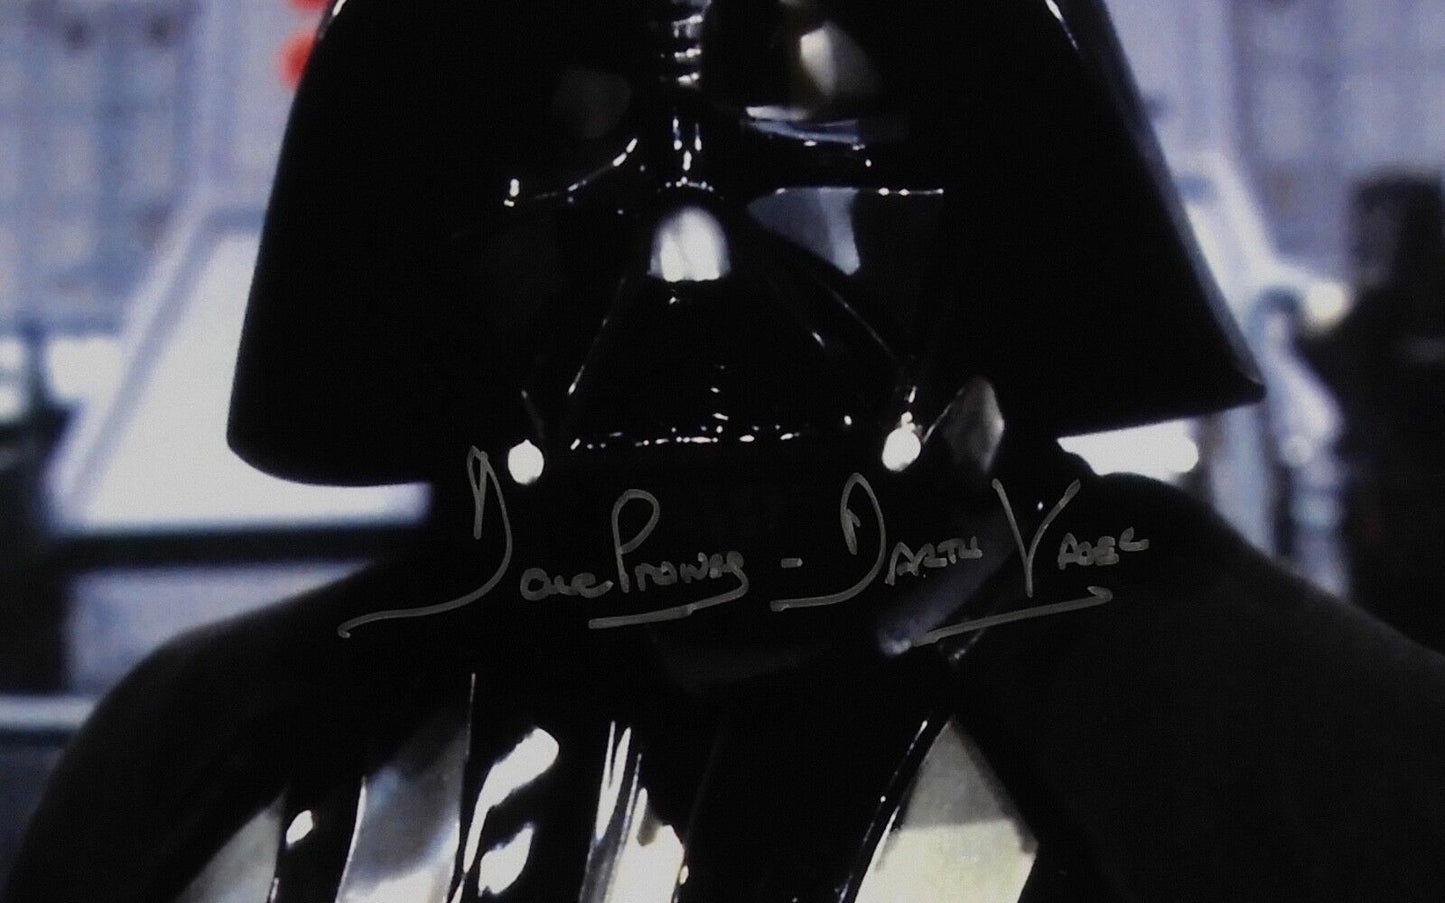 Star Wars David Prowse Darth Vader Star Wars Autograph Signed JSA 12 x 16